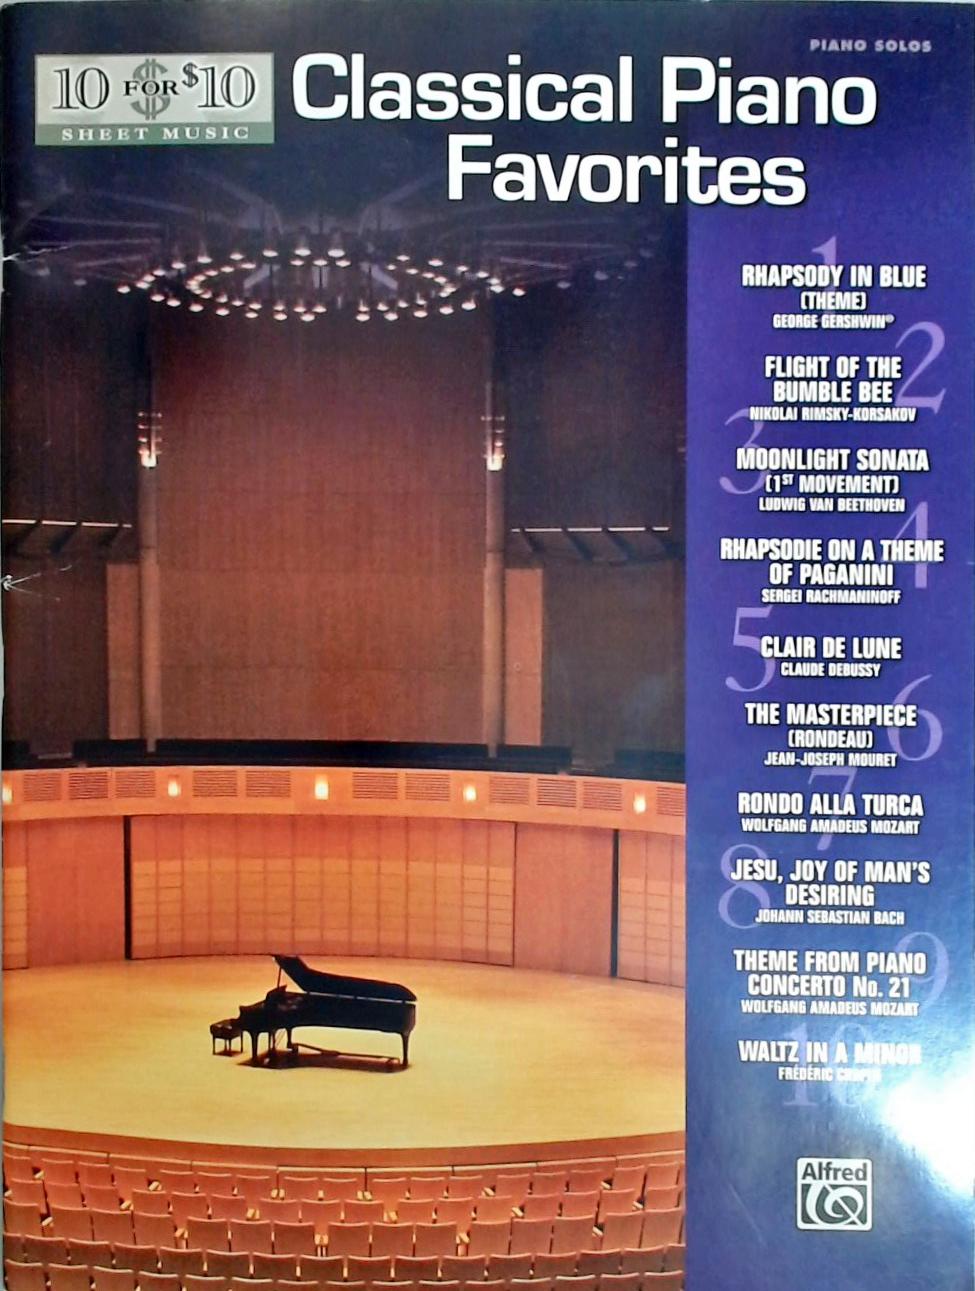 Classical Piano Favorites